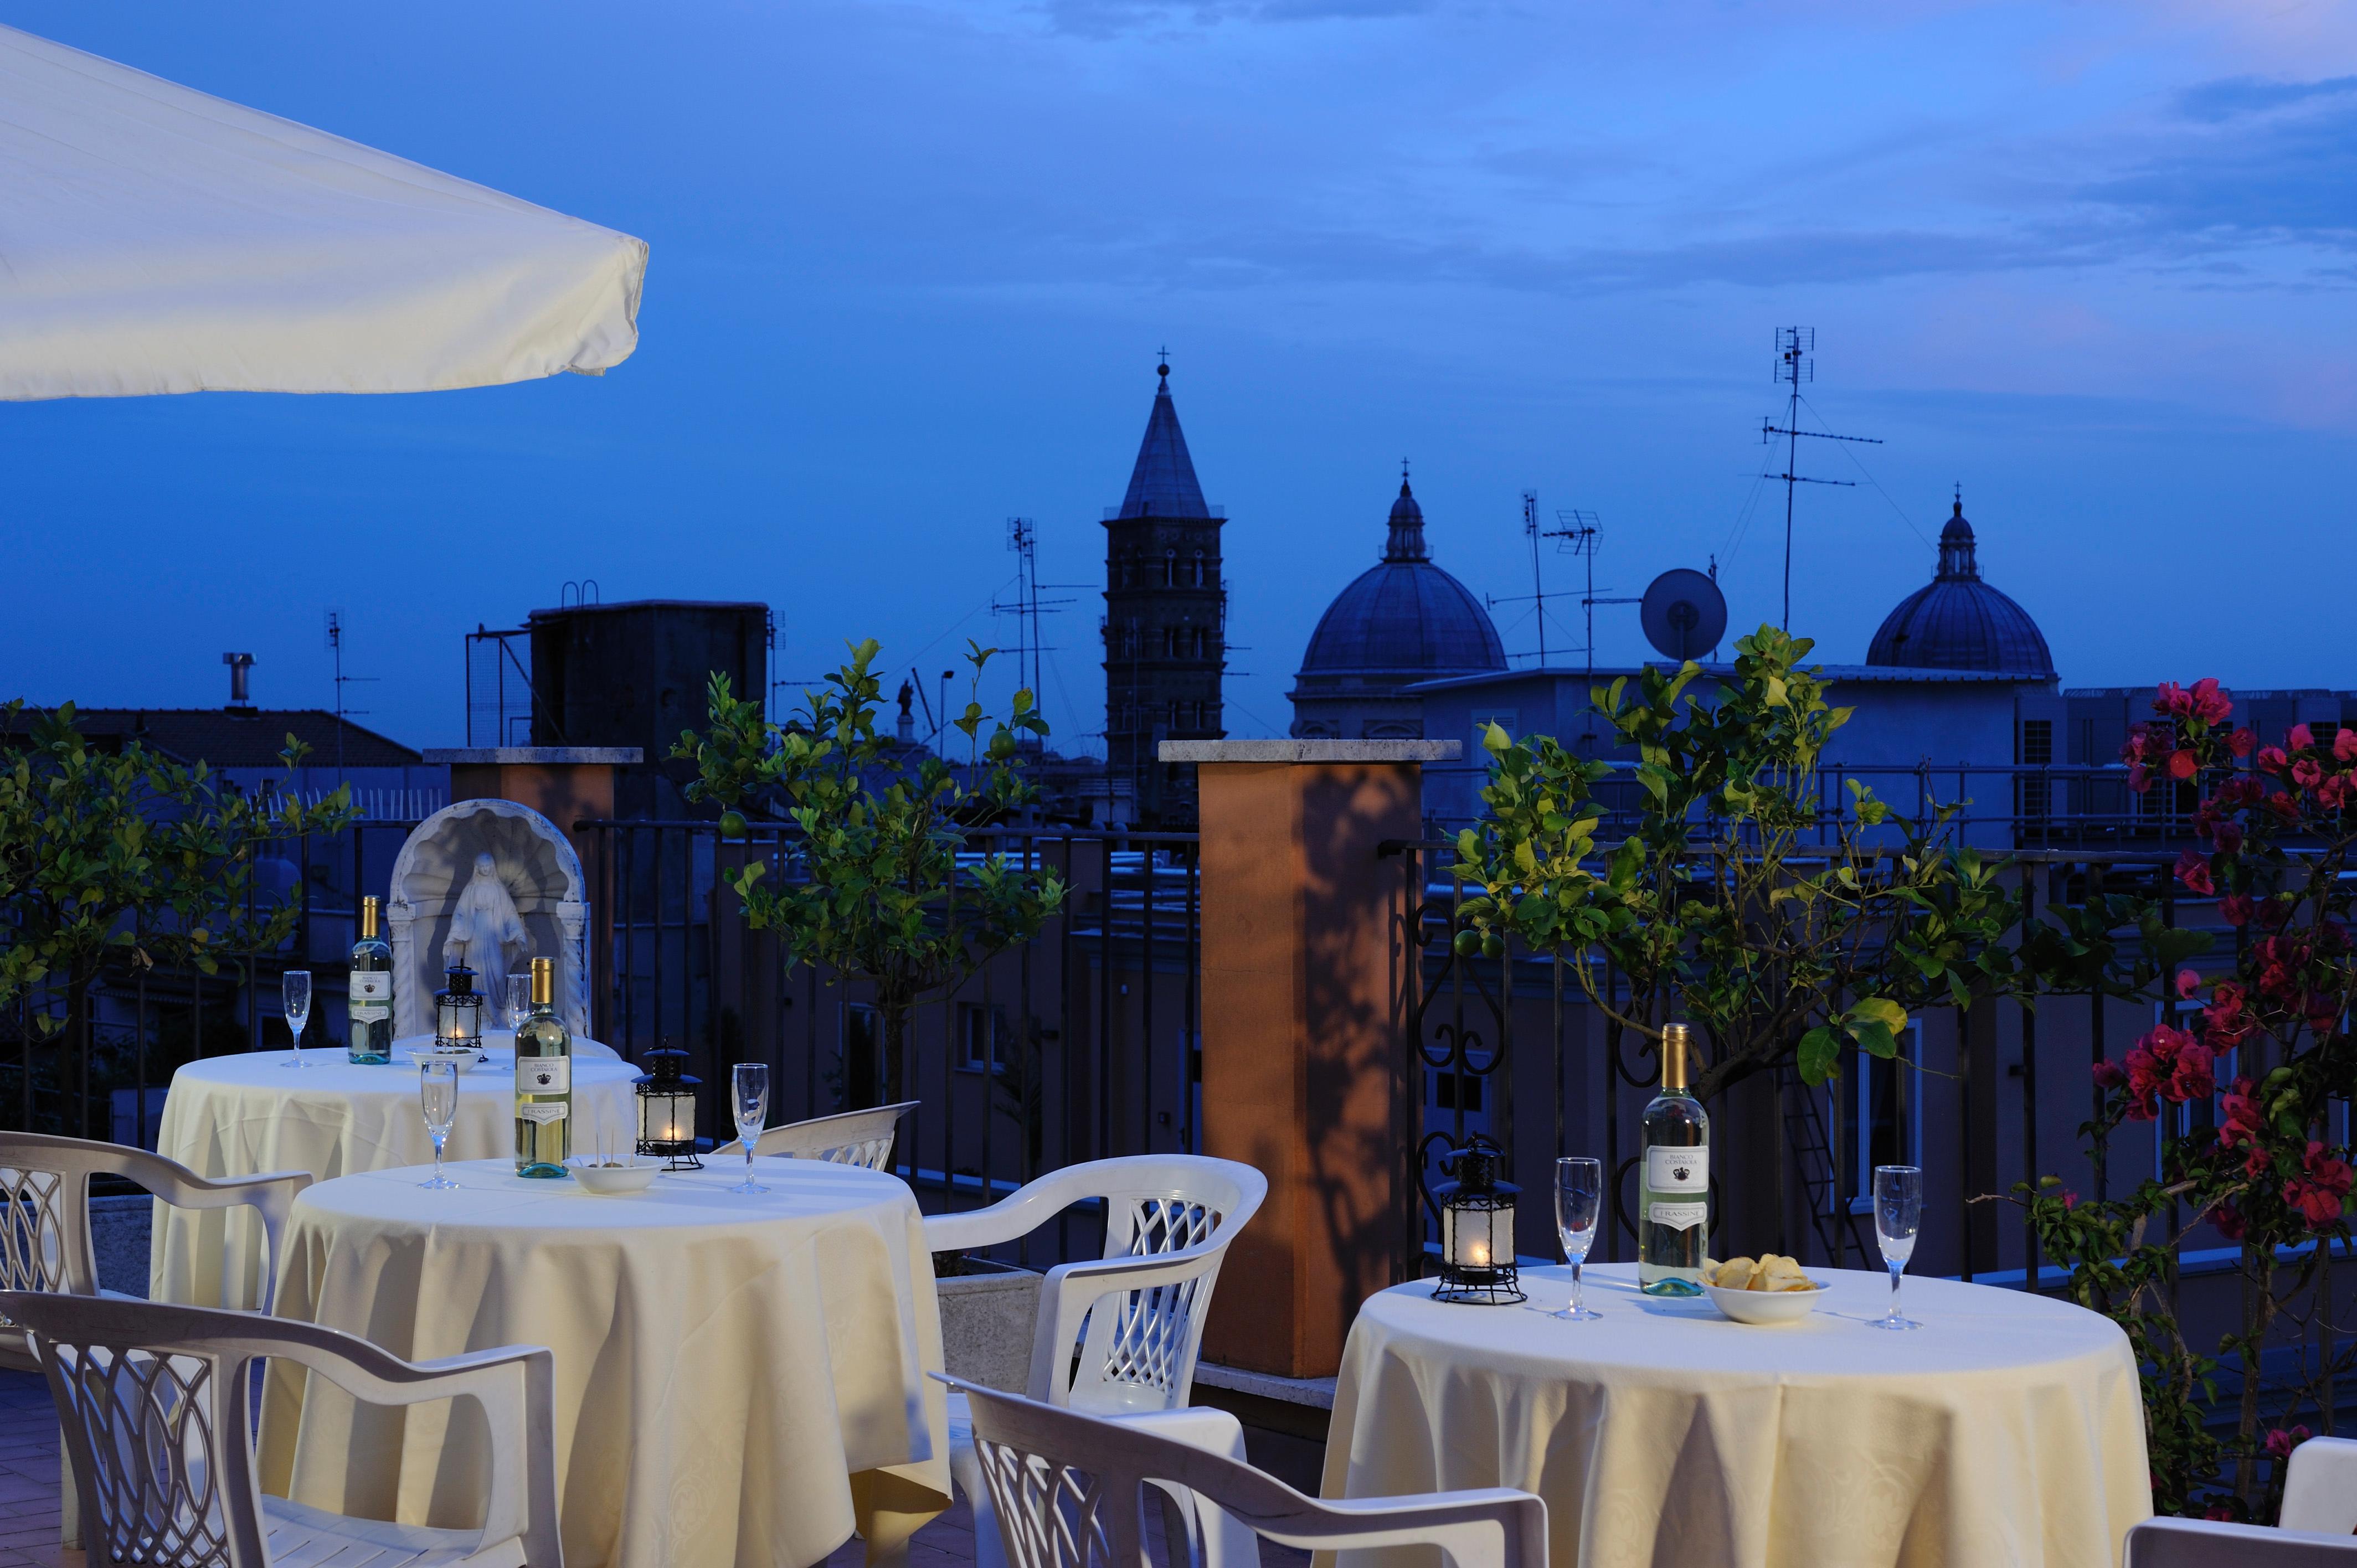 Hotel Torino Roma Restaurante foto